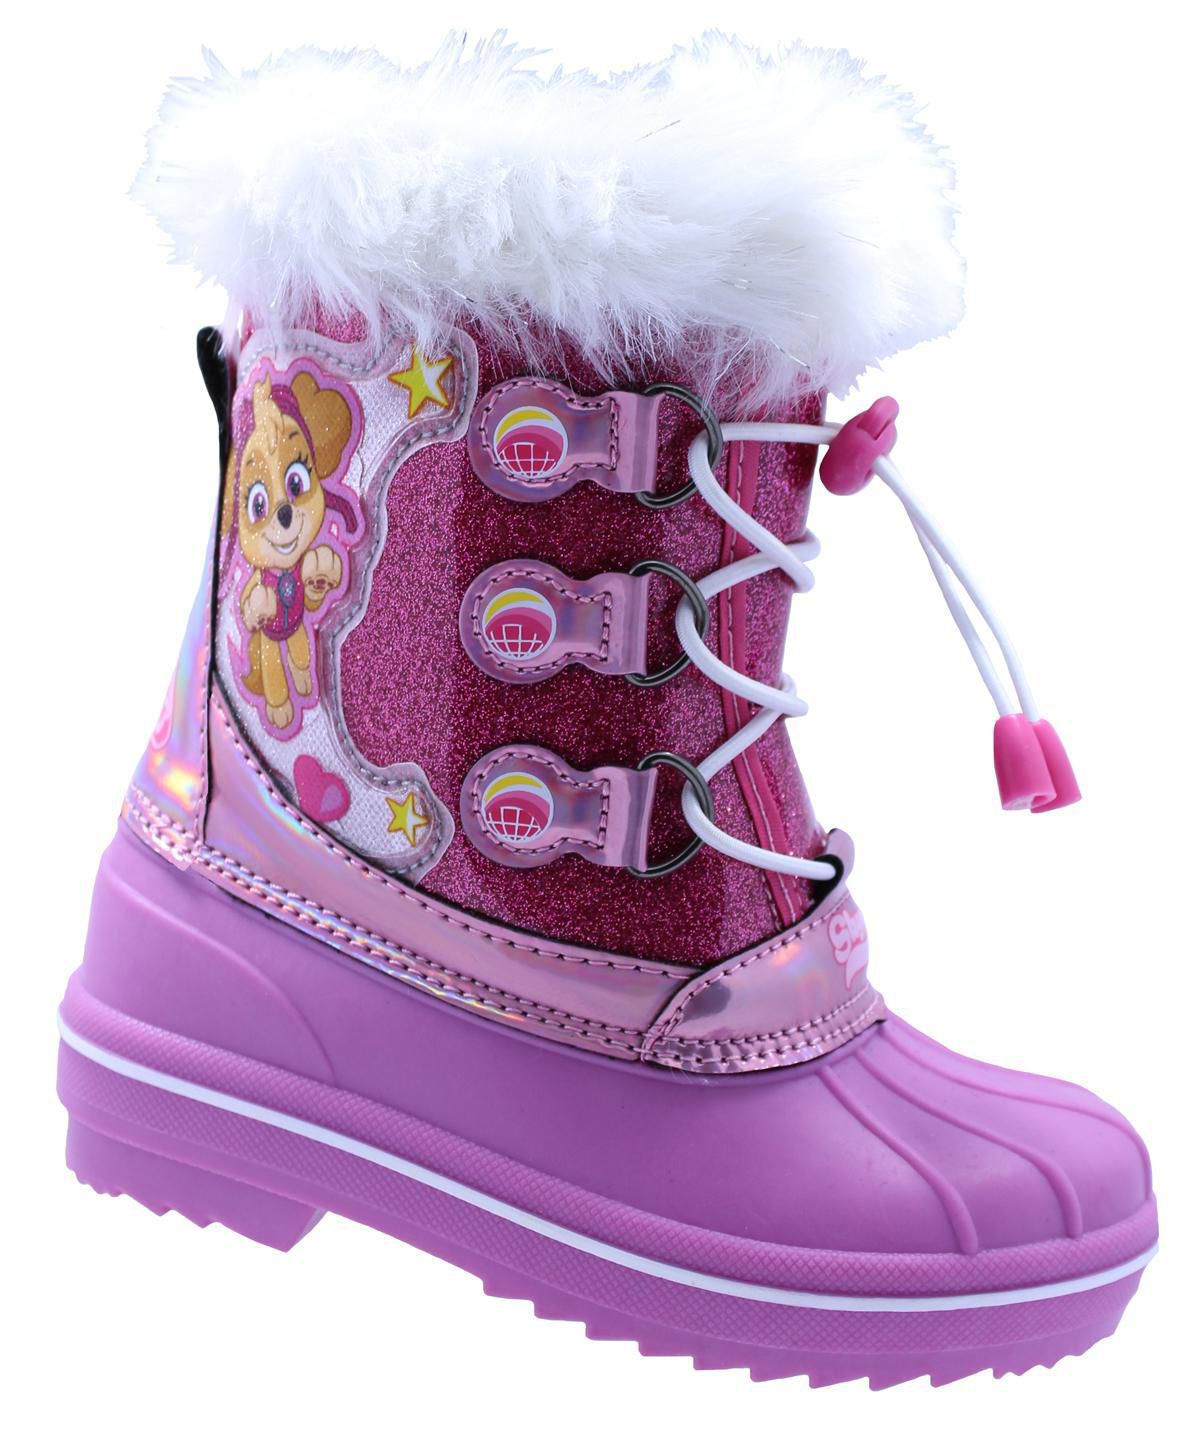 paw patrol girls boots